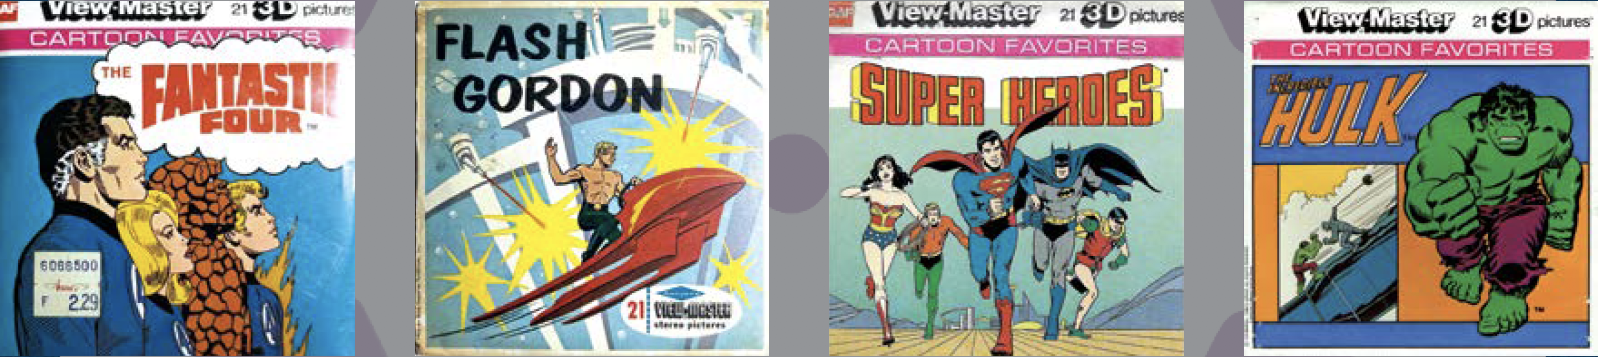 The Endless Joy of Superhero VIEW-MASTERS  13th Dimension, Comics,  Creators, Culture